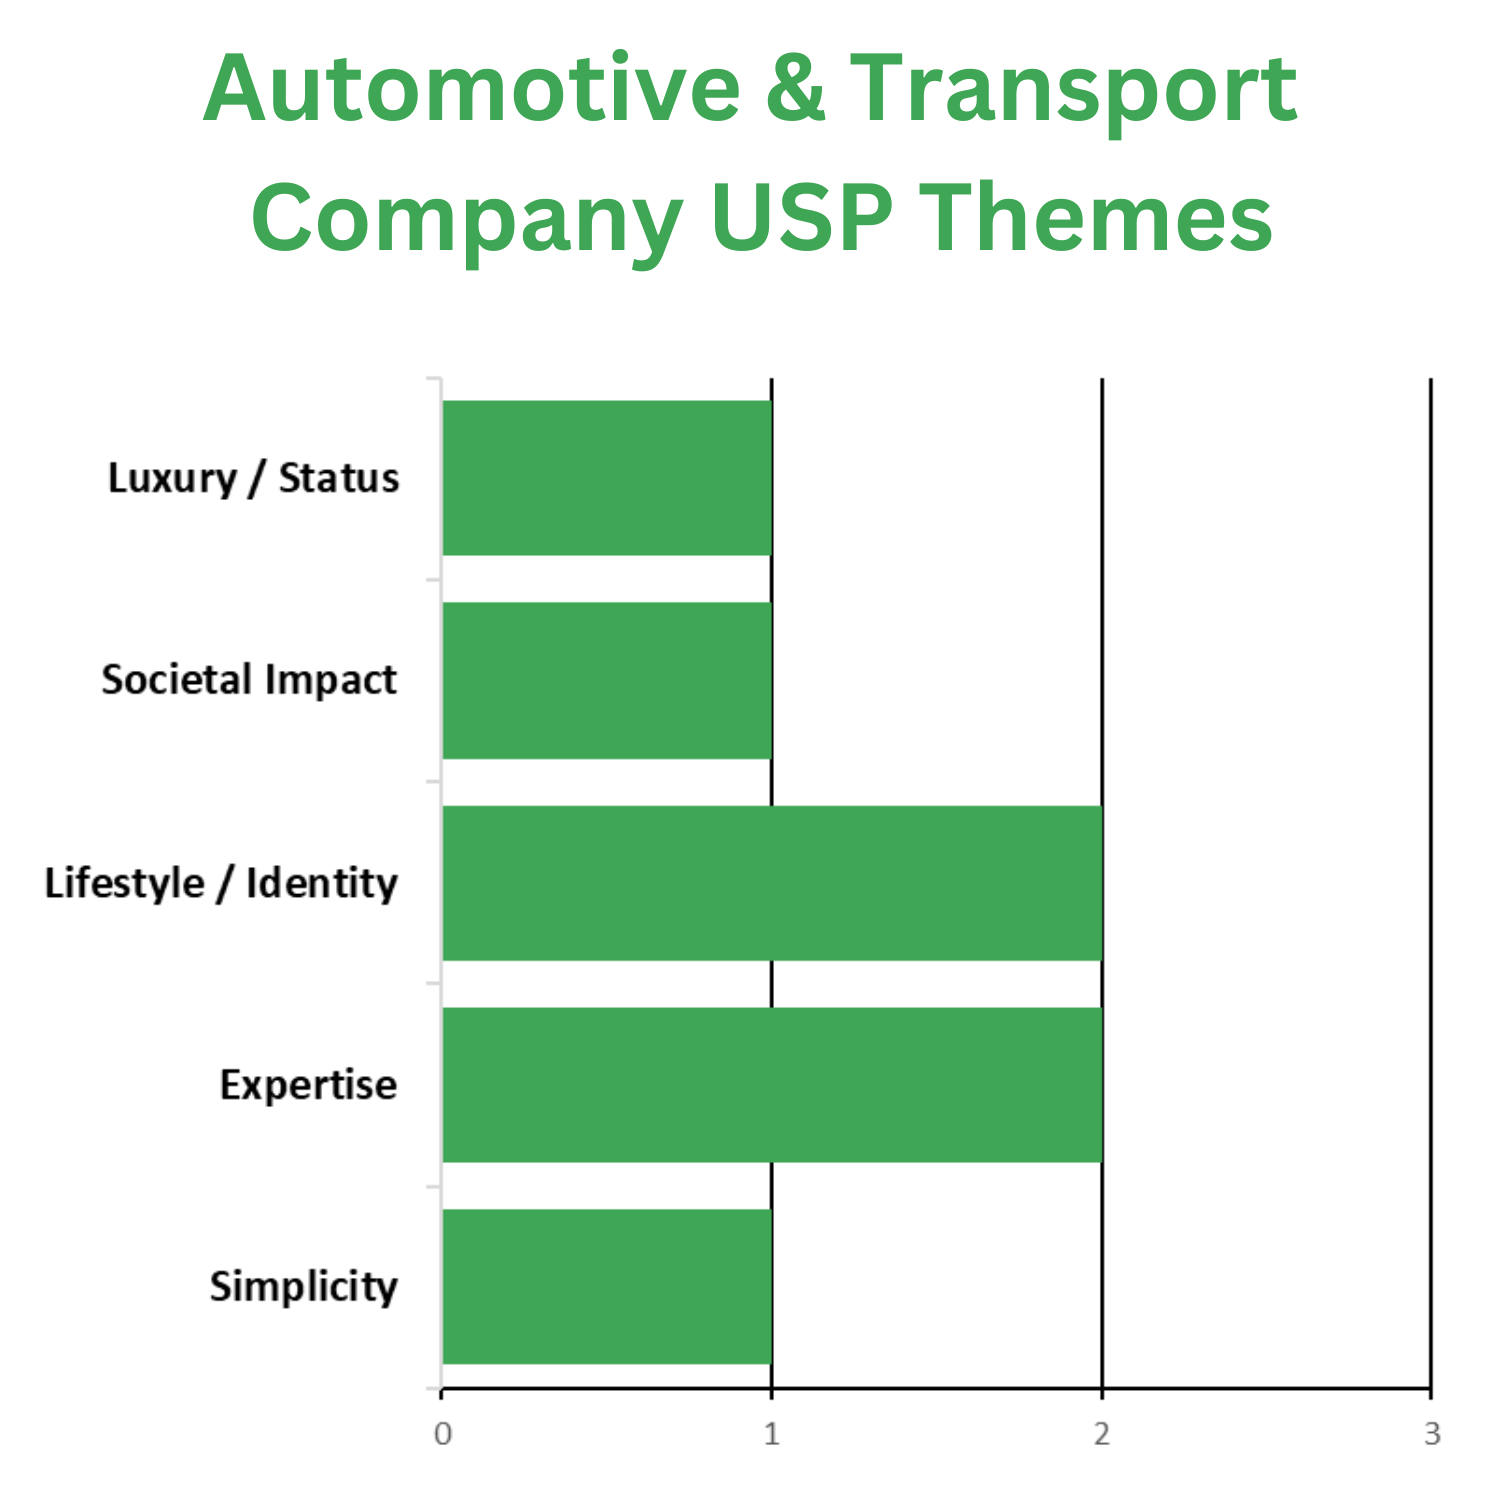 Automotive & Transport Company USP Themes